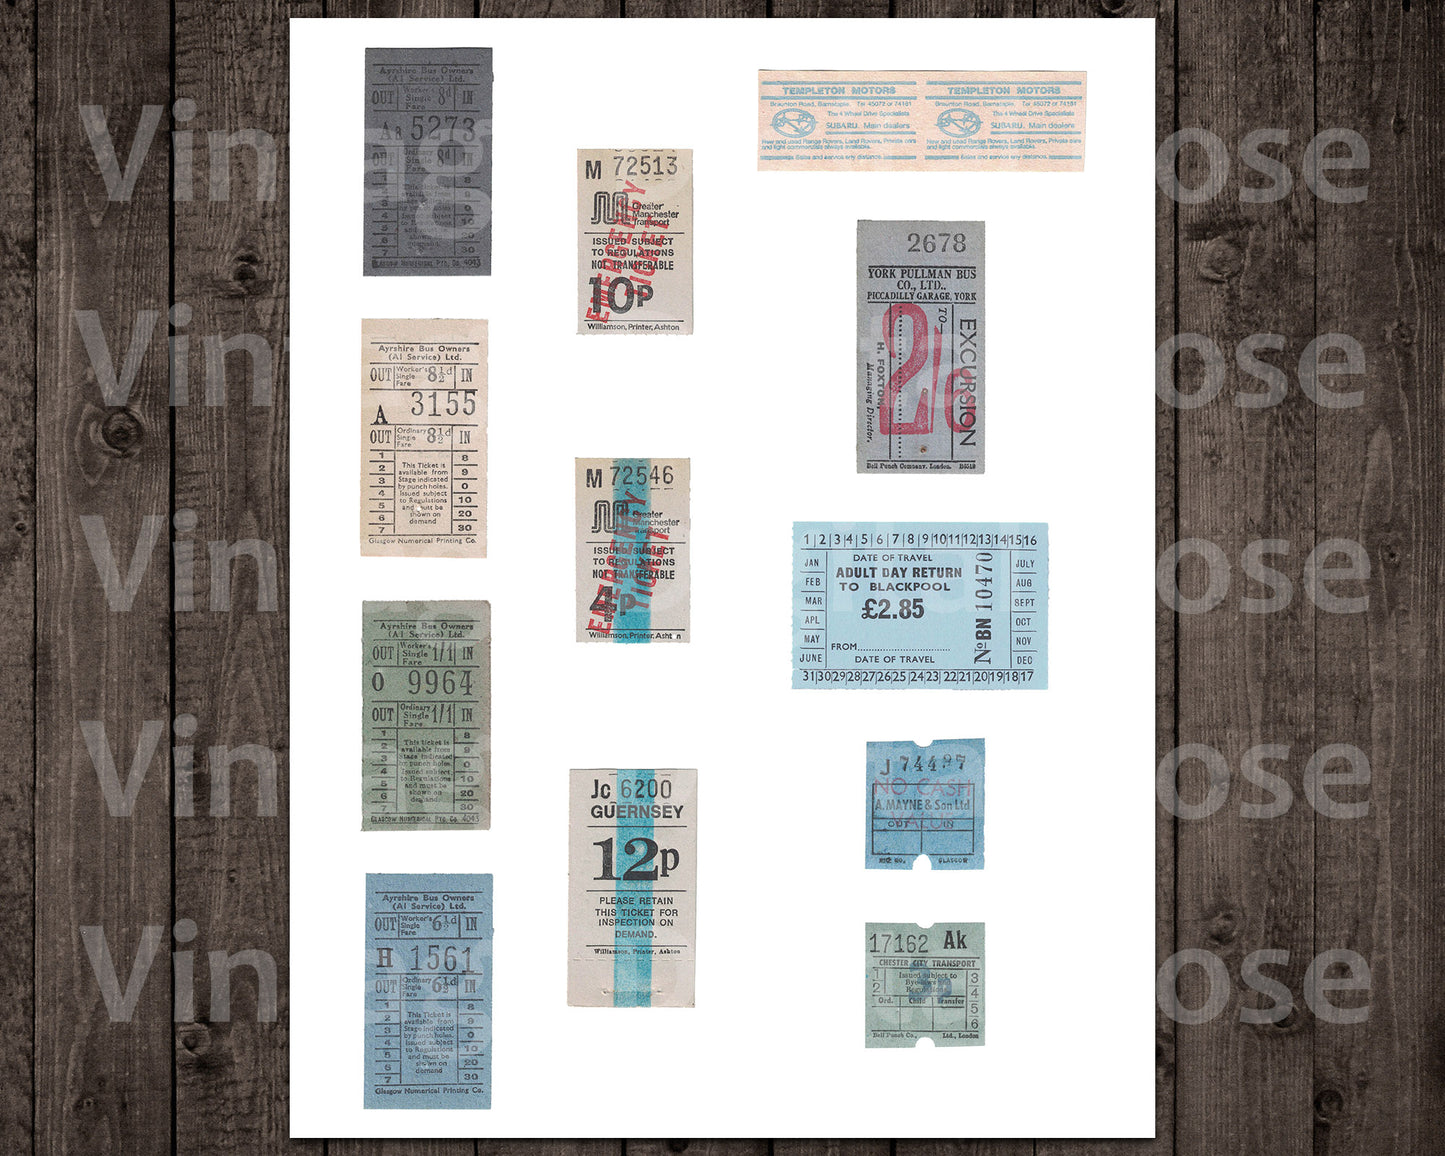 Vintage Printable British Bus Tickets Blue Neutral Digital Collage Sheet JPG PNG Format Set of 12 Tickets Vintage Transportation Ephemera